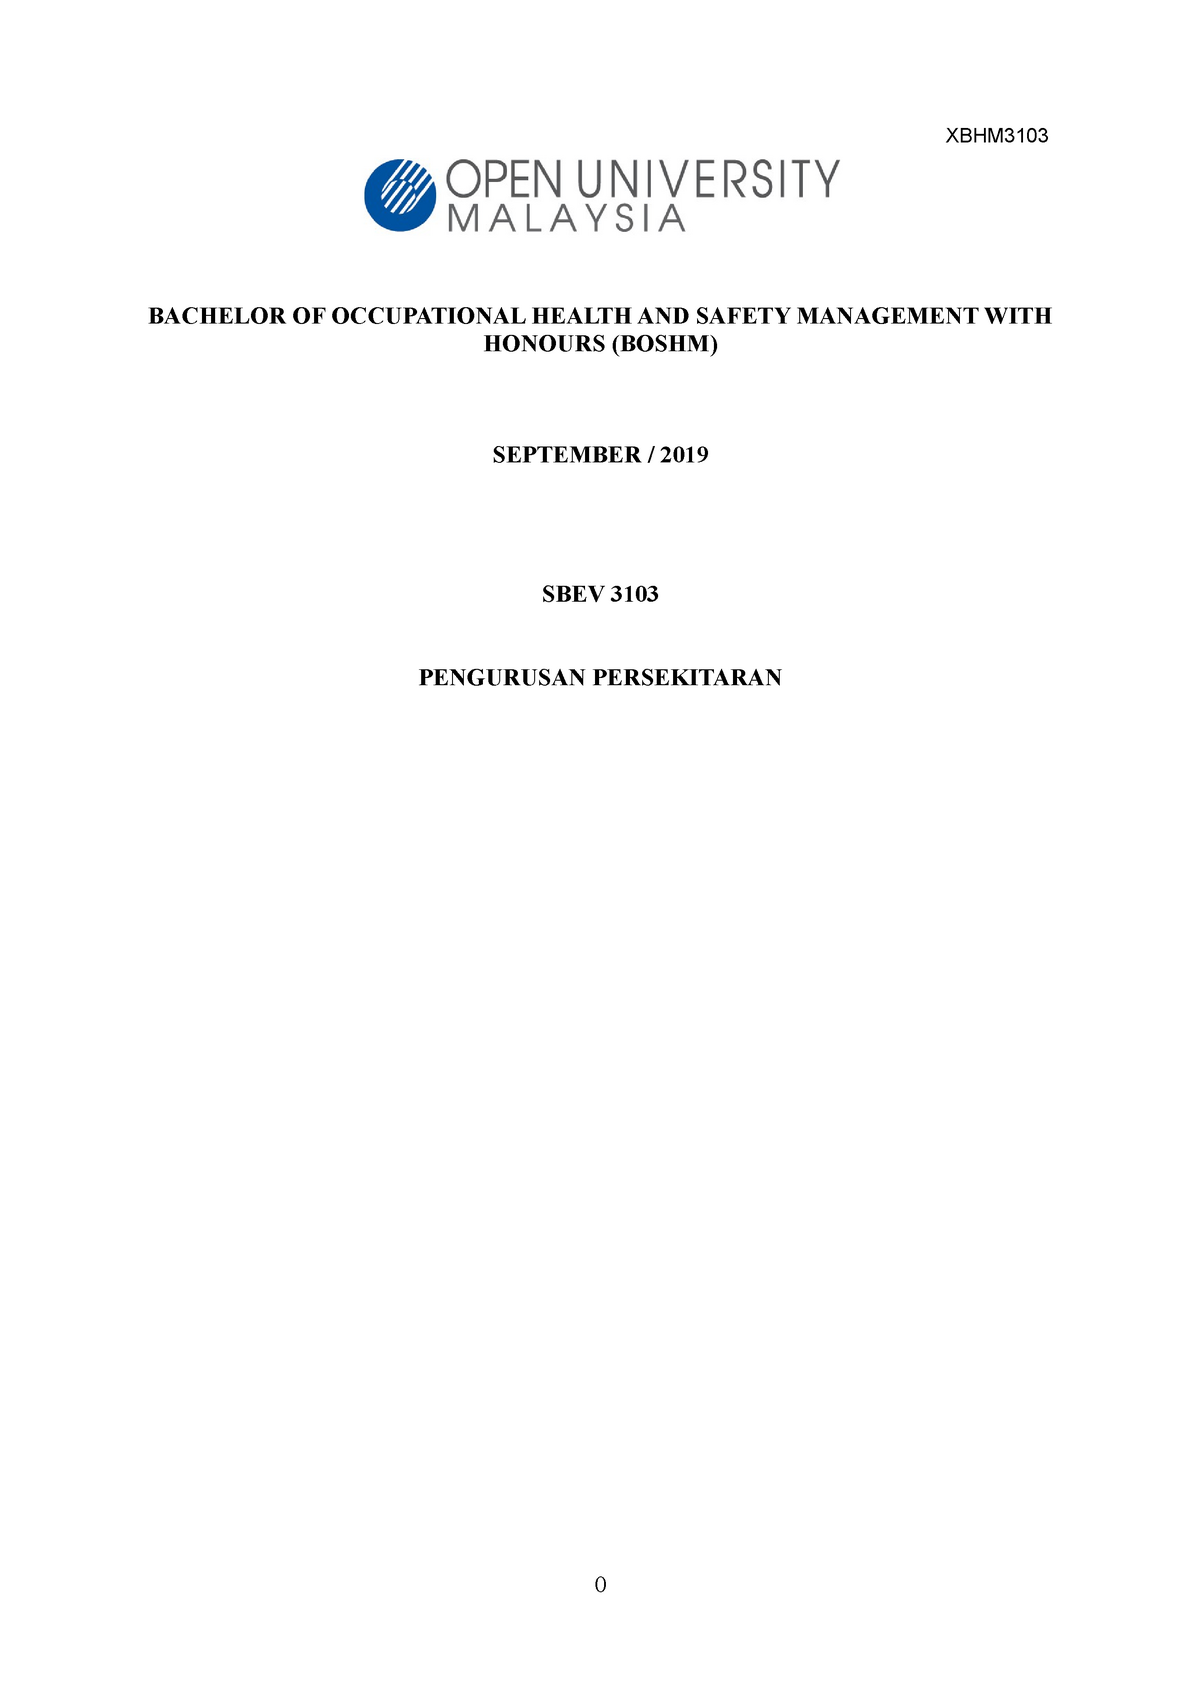 SBEV3103 Pengurusan Persekitaran - environmental management - StuDocu